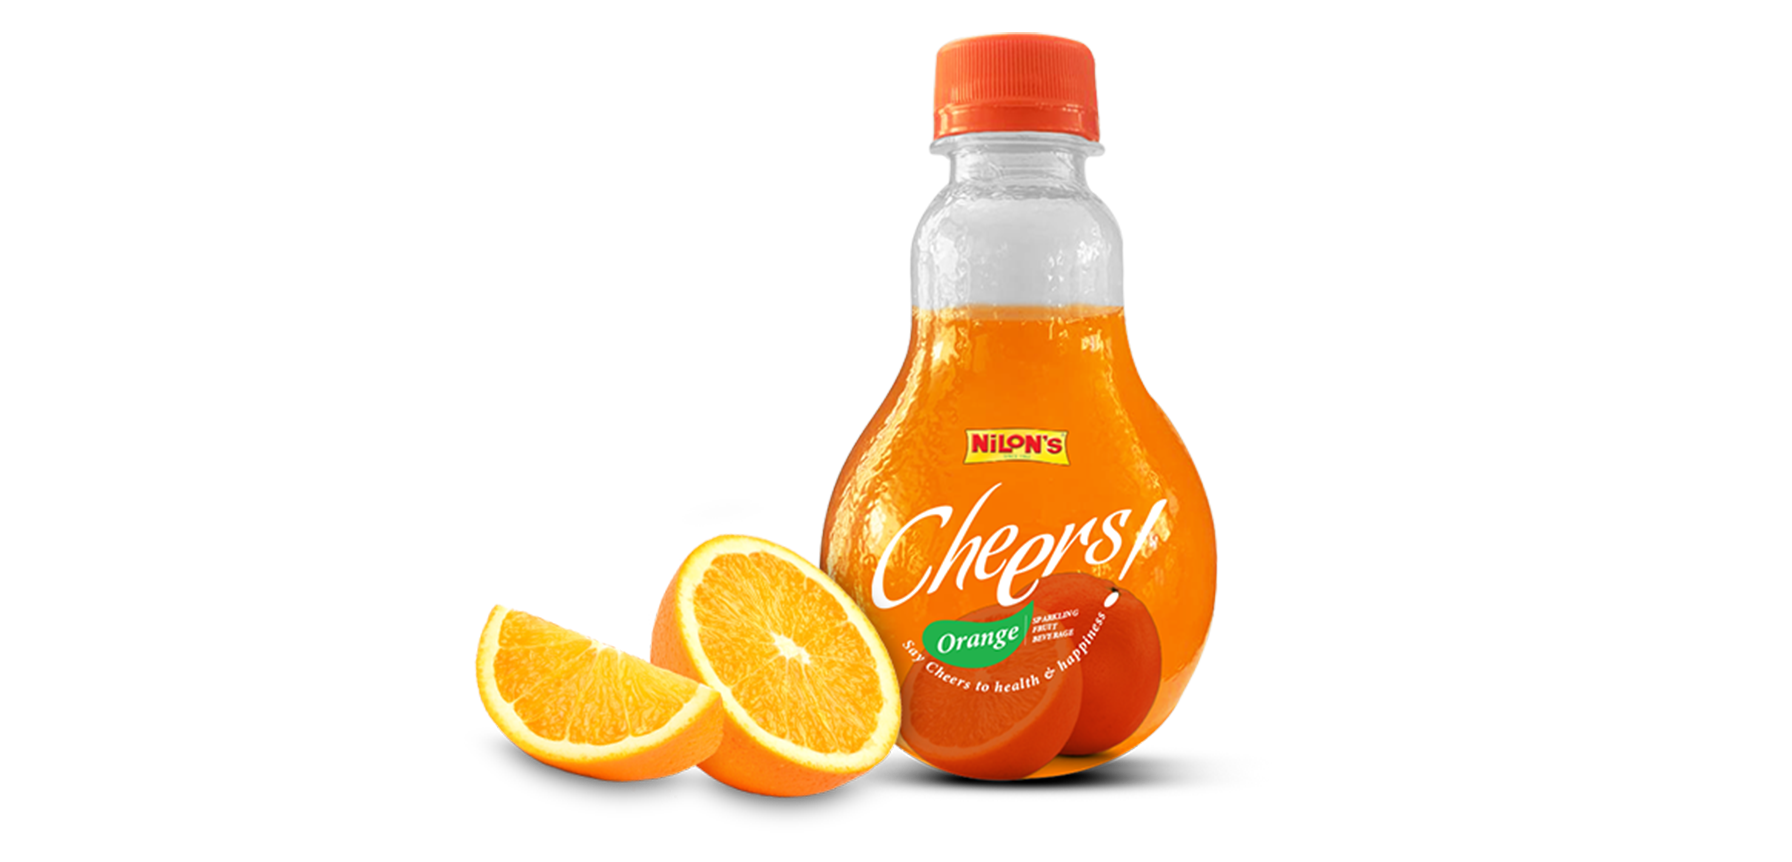 Cheers Orange